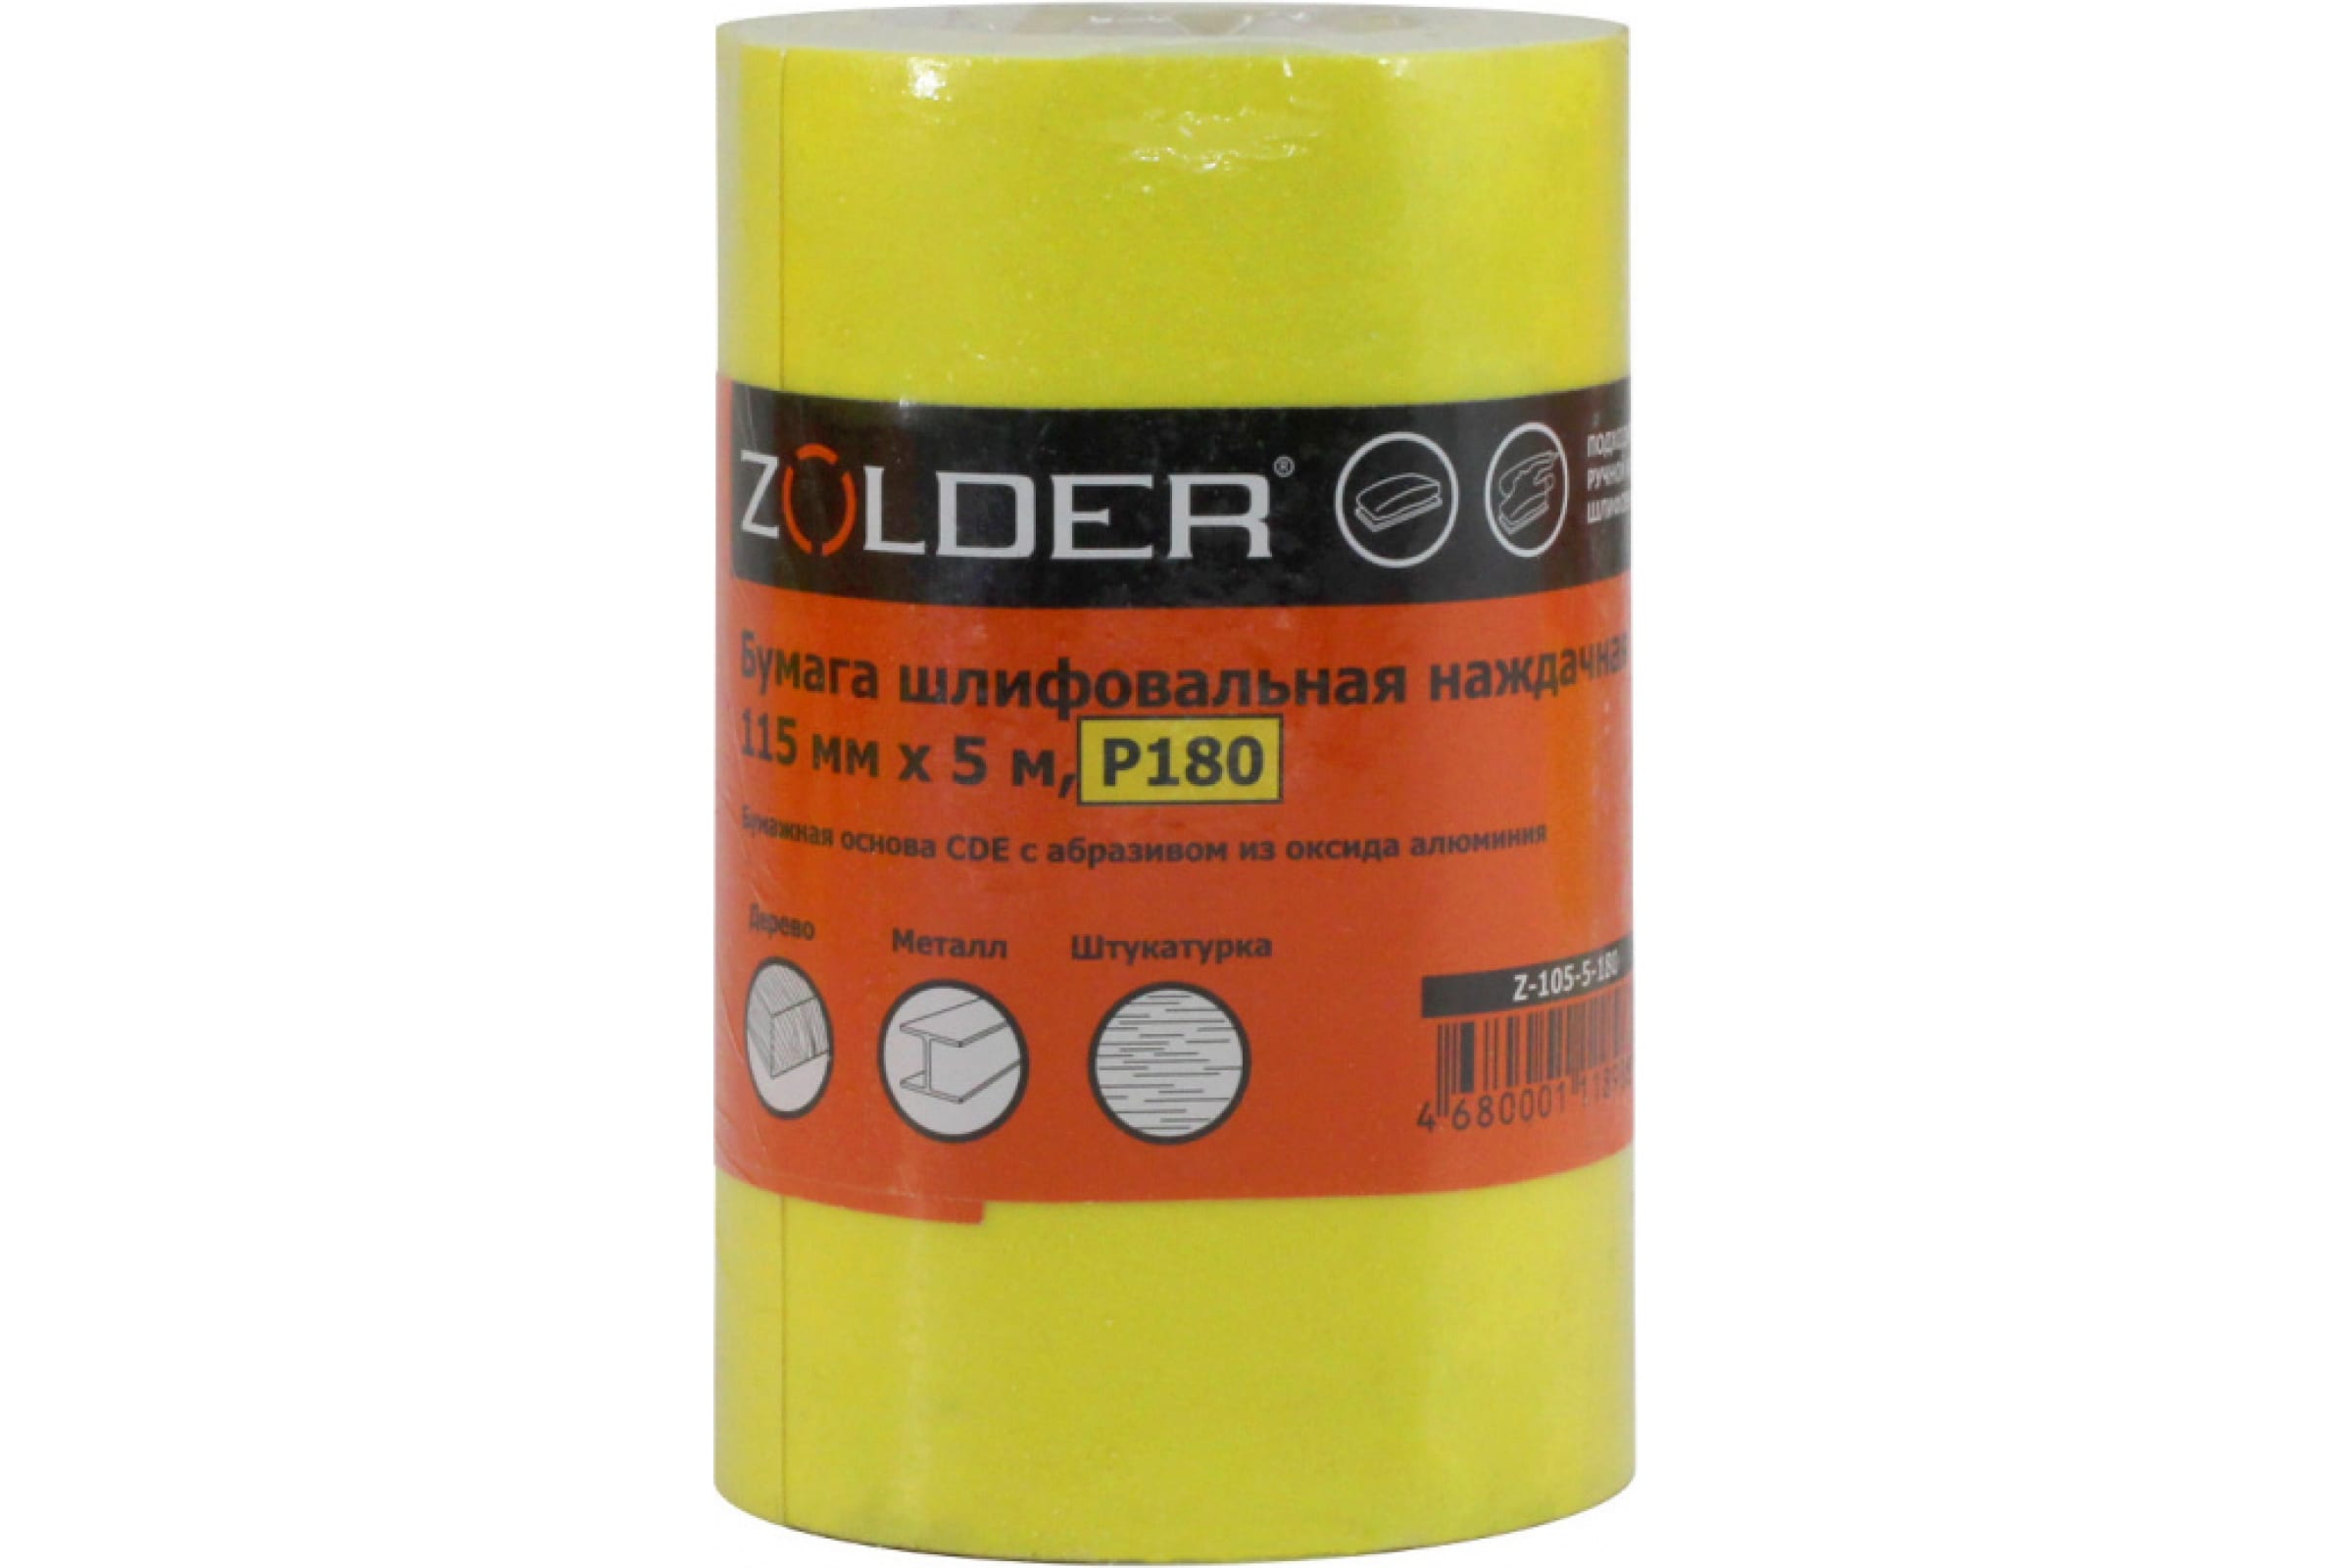 ZOLDER Бумага шлифовальная наждачная 115 мм х 5 м, Р180 / Z-105-5-180